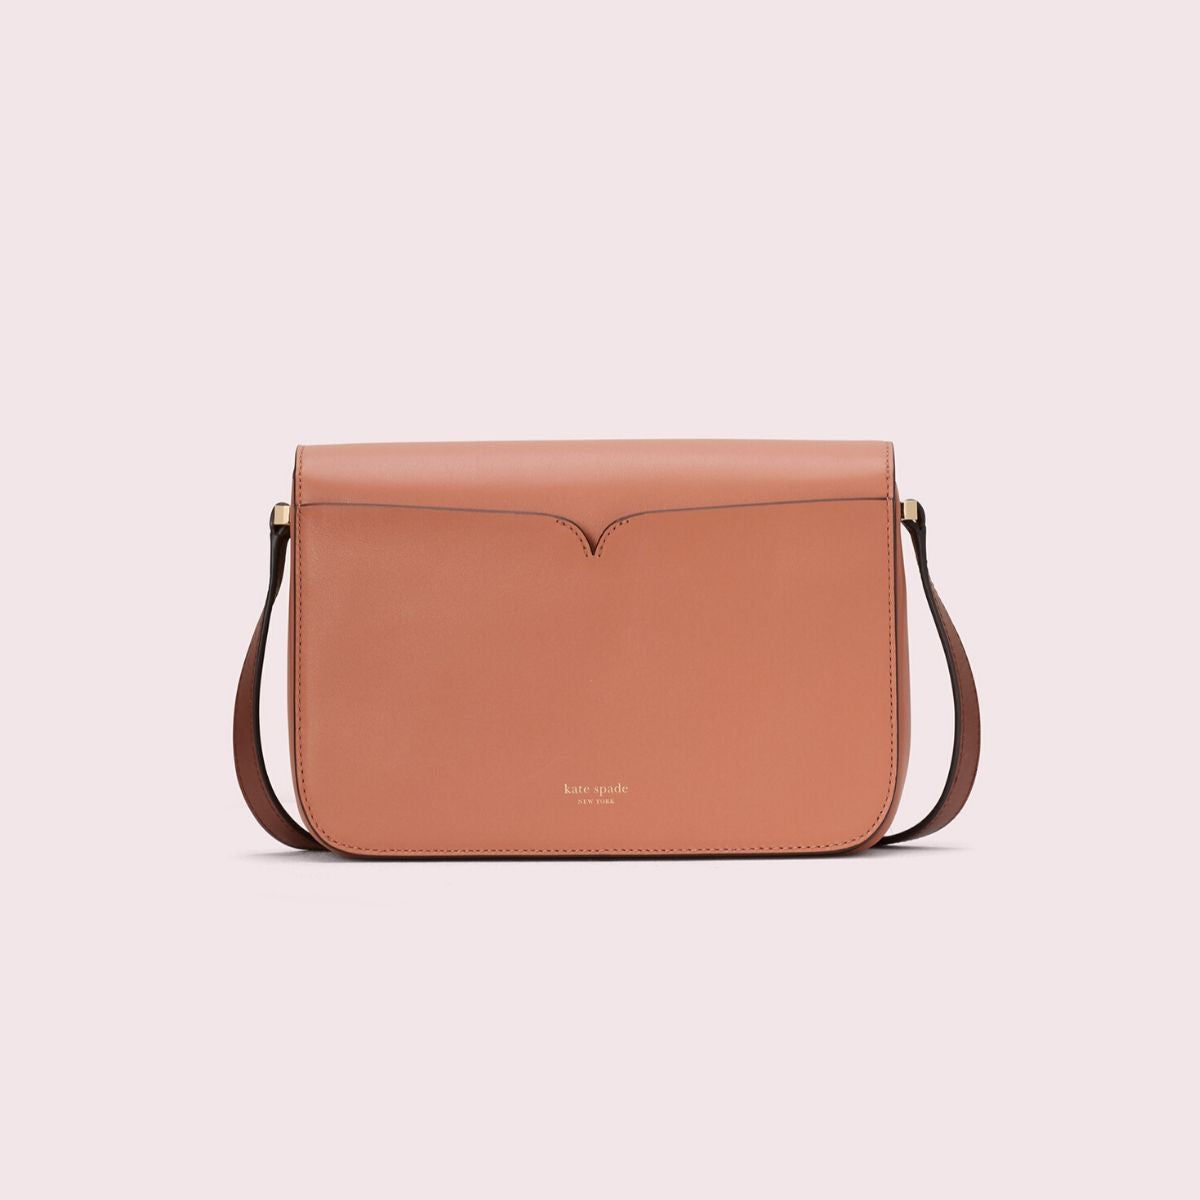 Kate Spade Nicola Twistlock Medium Shoulder Bag-Deep Evergreen PXRUA167-312  - Handbags, Nicola - Jomashop